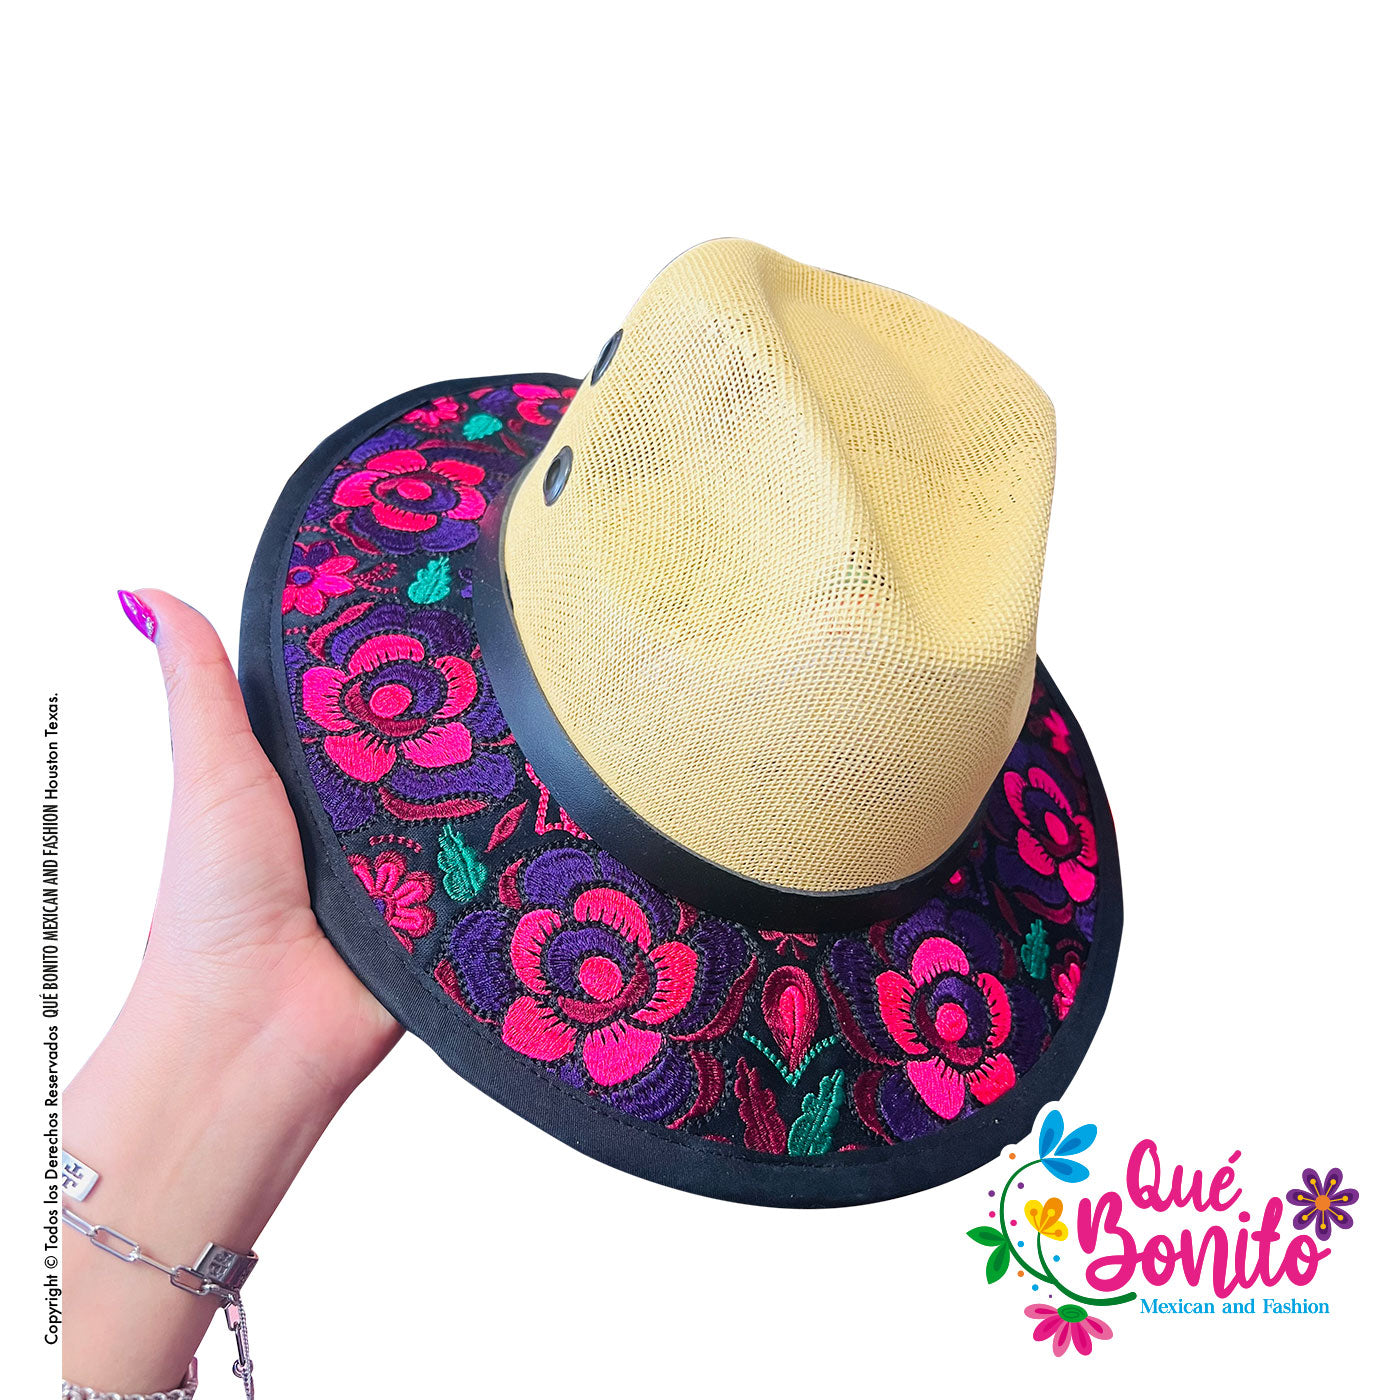 Xiomara Hot Pink Floral Hat Que Bonito Mexican and Fashion